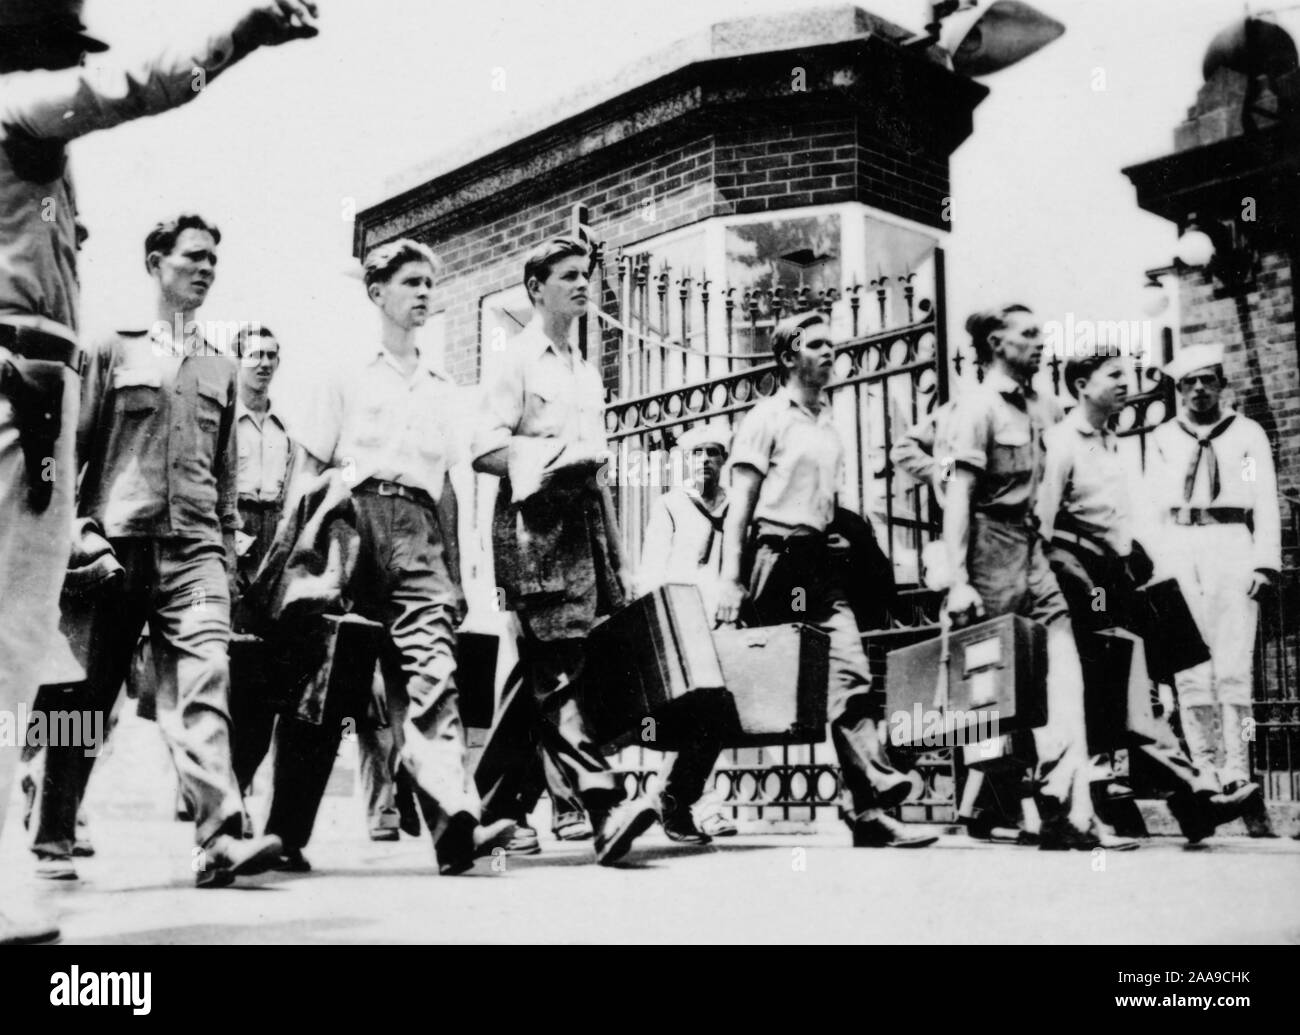 Les recrues de la marine à pied dans les portes de la station d'entraînement de la marine des Grands Lacs, ca. 1941. Banque D'Images